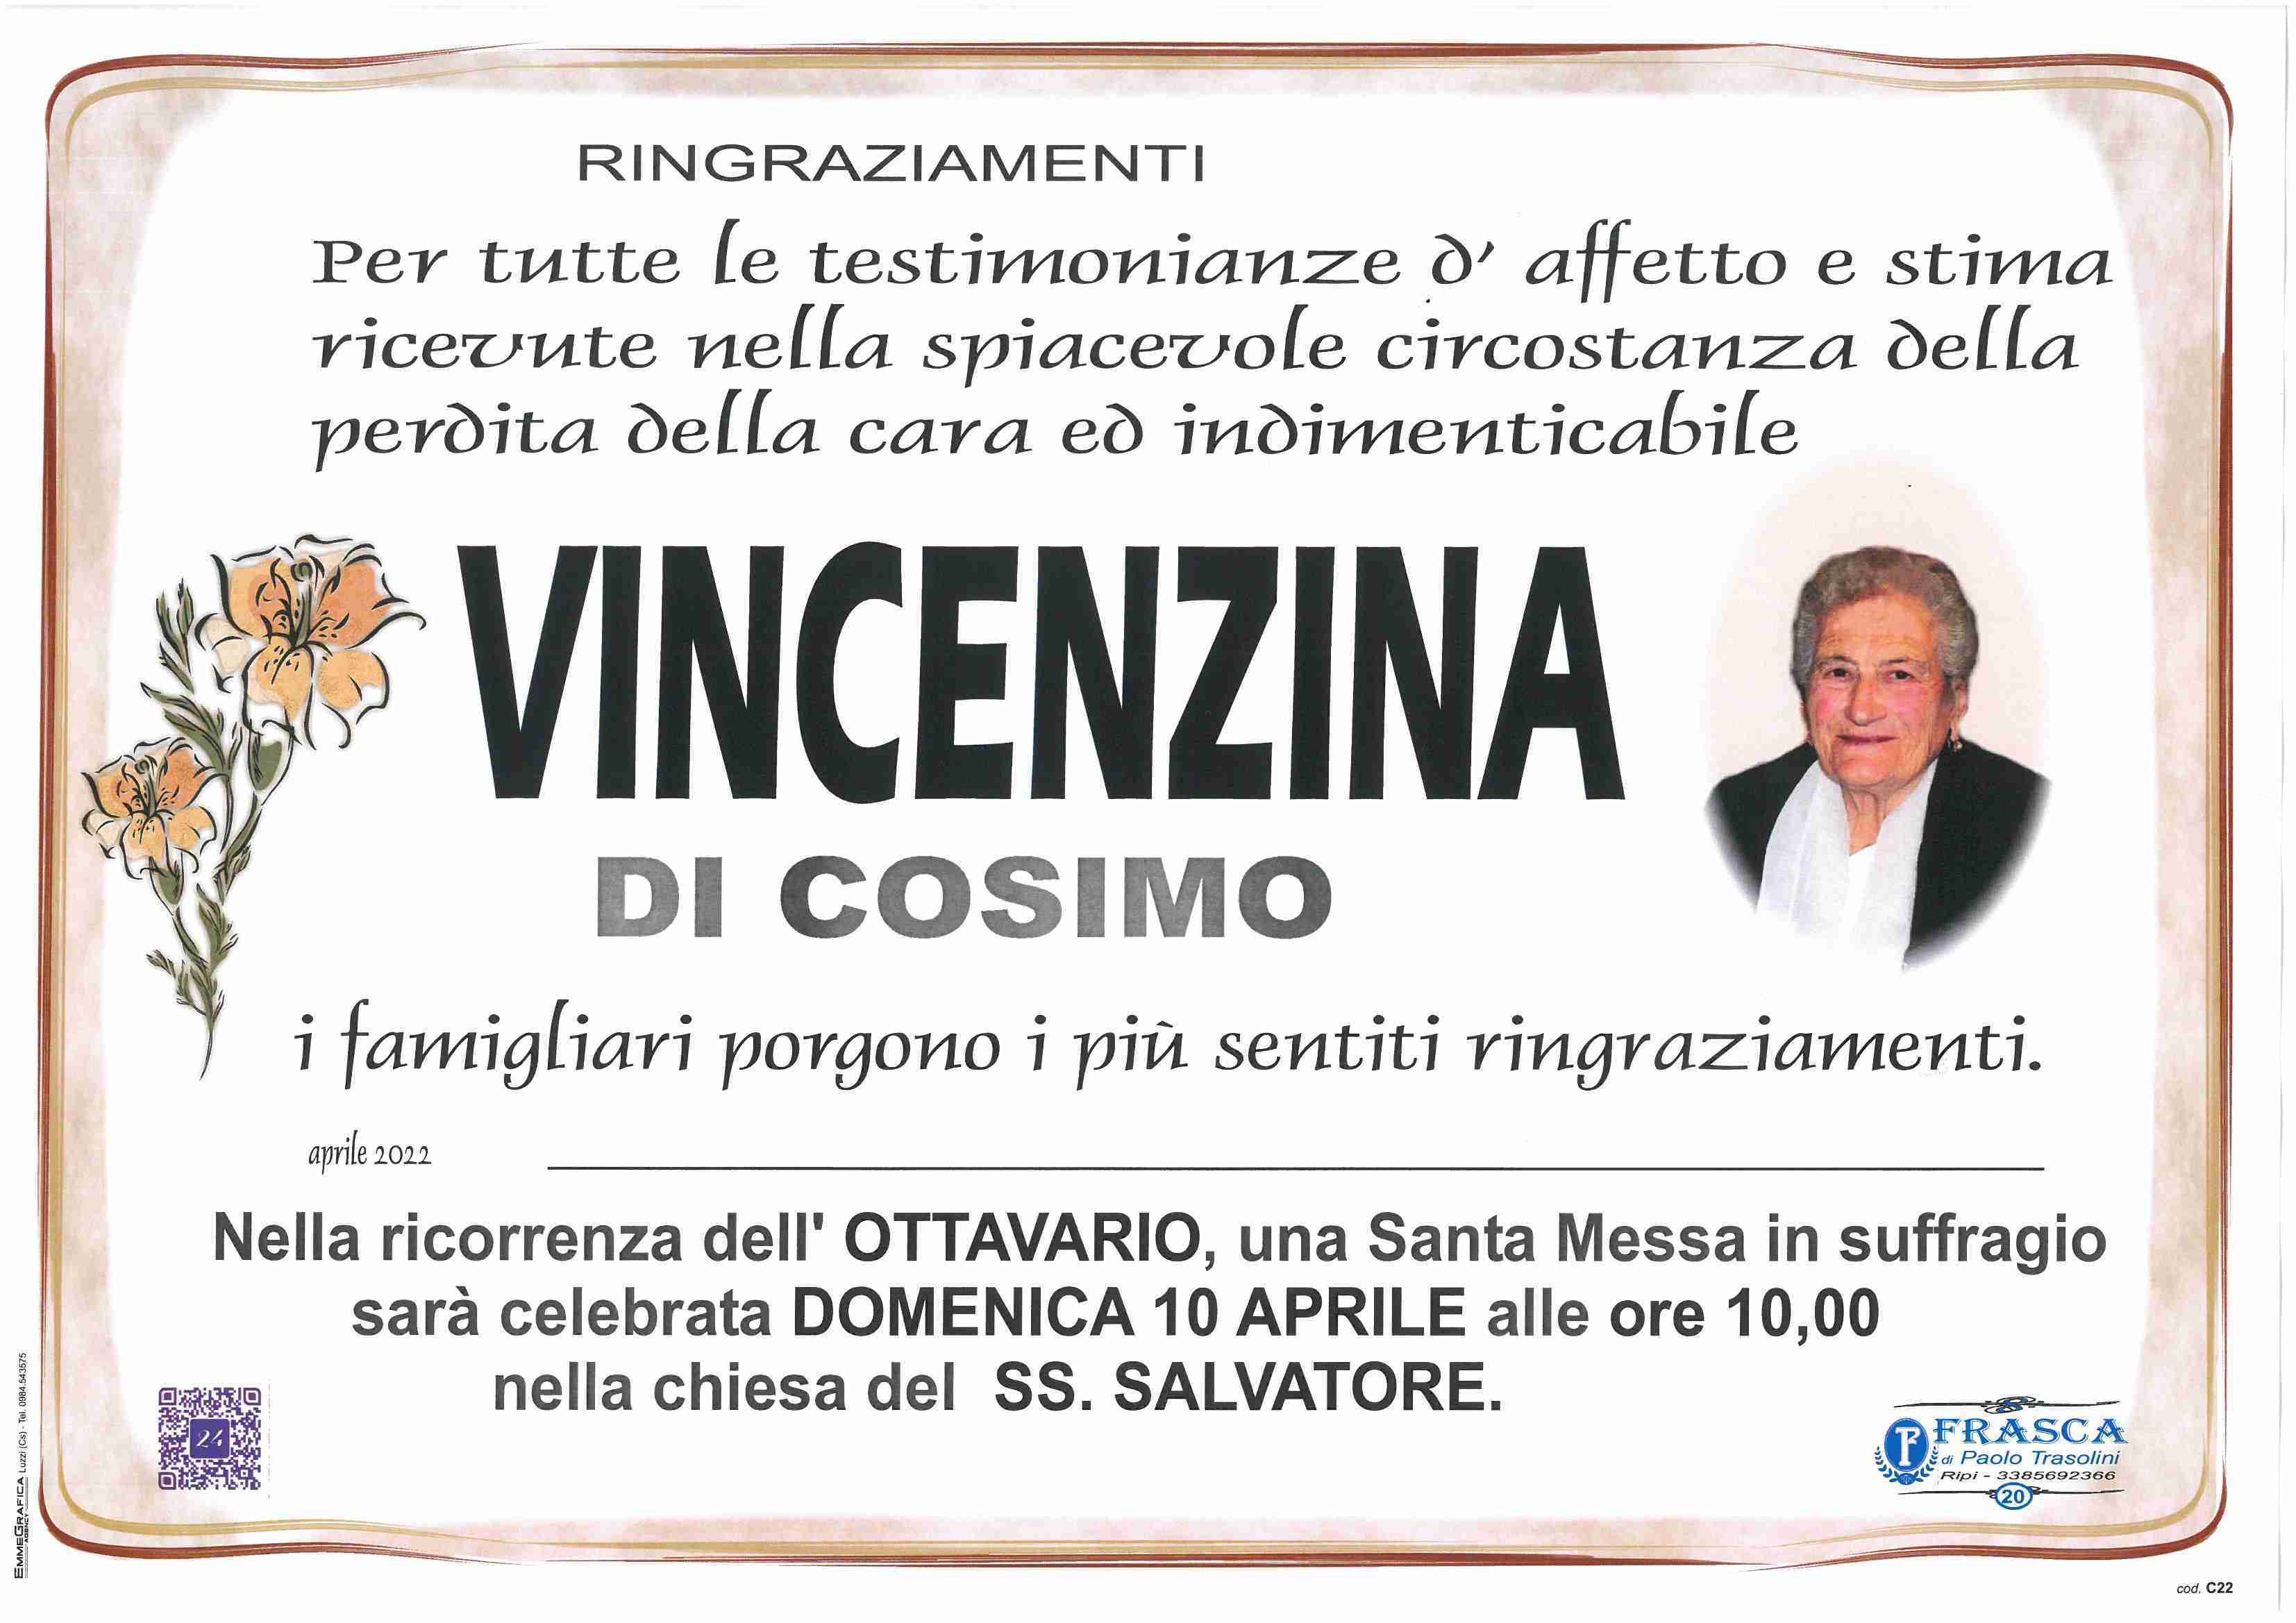 Vincenzina Di Cosimo